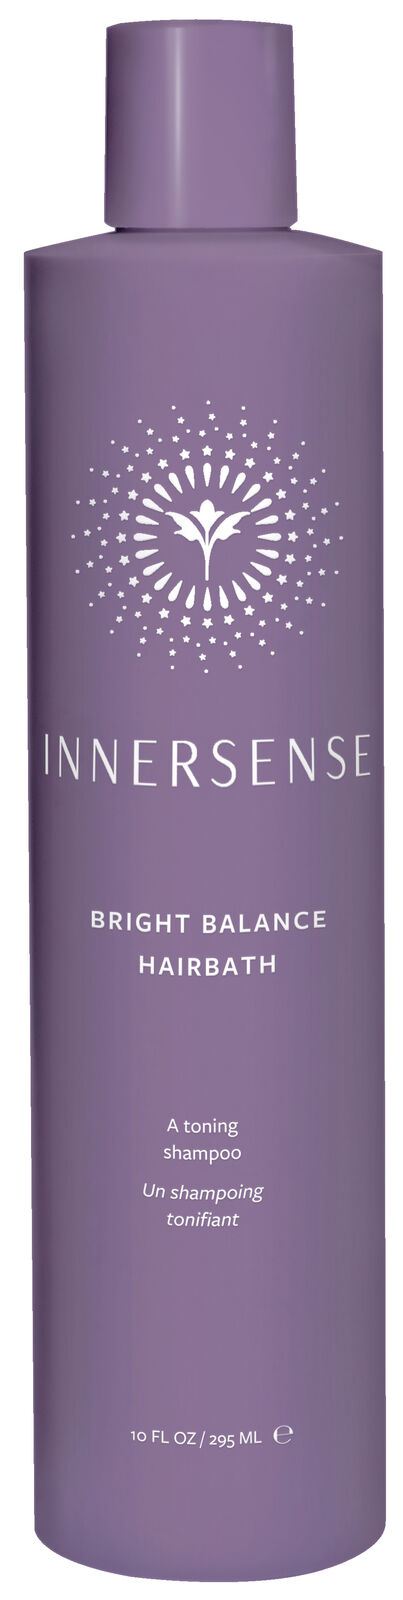 Innersense Bright Balance Hairbath 295ml